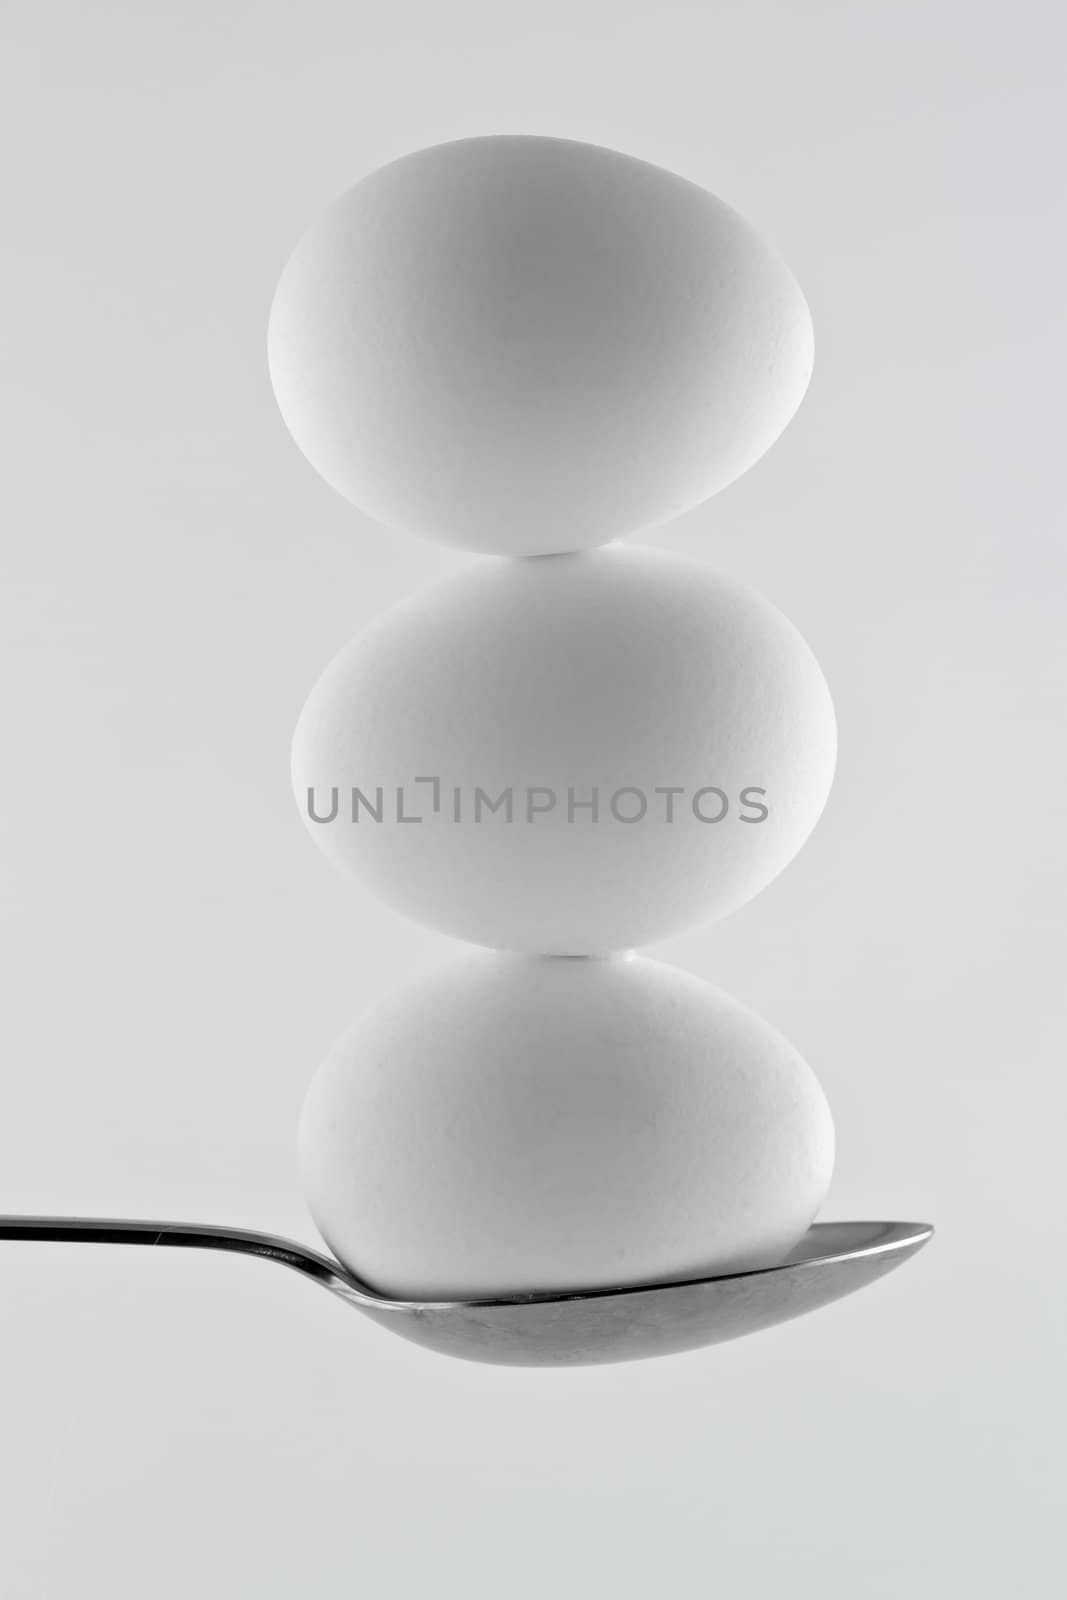 Three white eggs balancing on a spoon